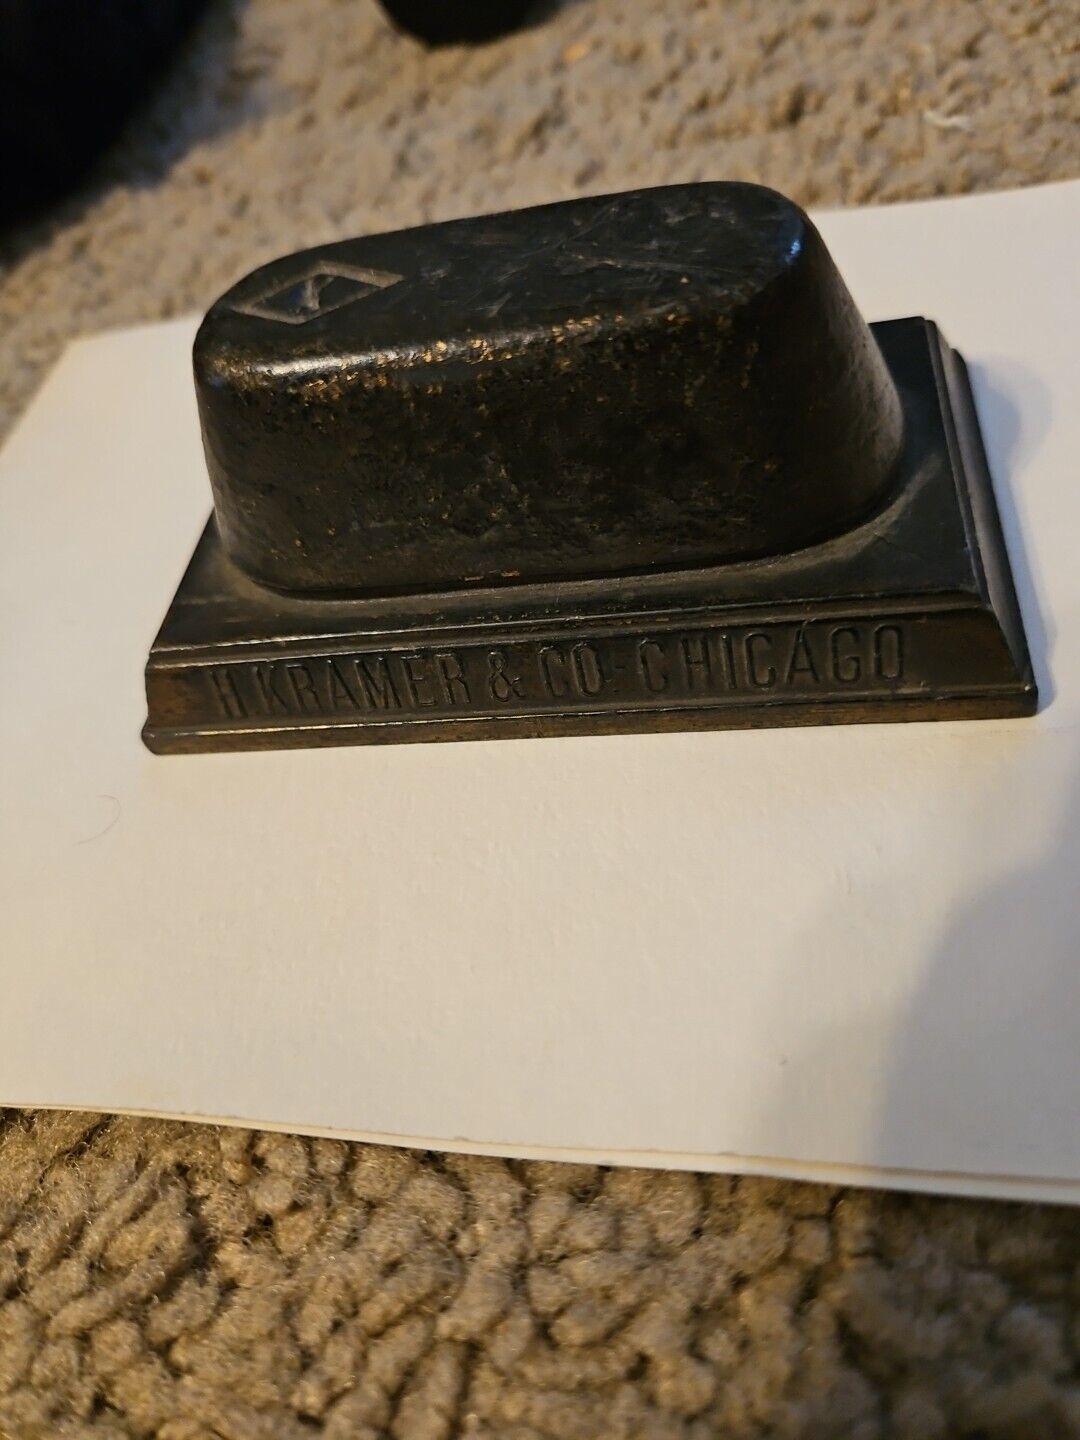 Vintage H Kramer & Co. Chicago. Bronze Paper weight. Ten ounces. Scarce rare.